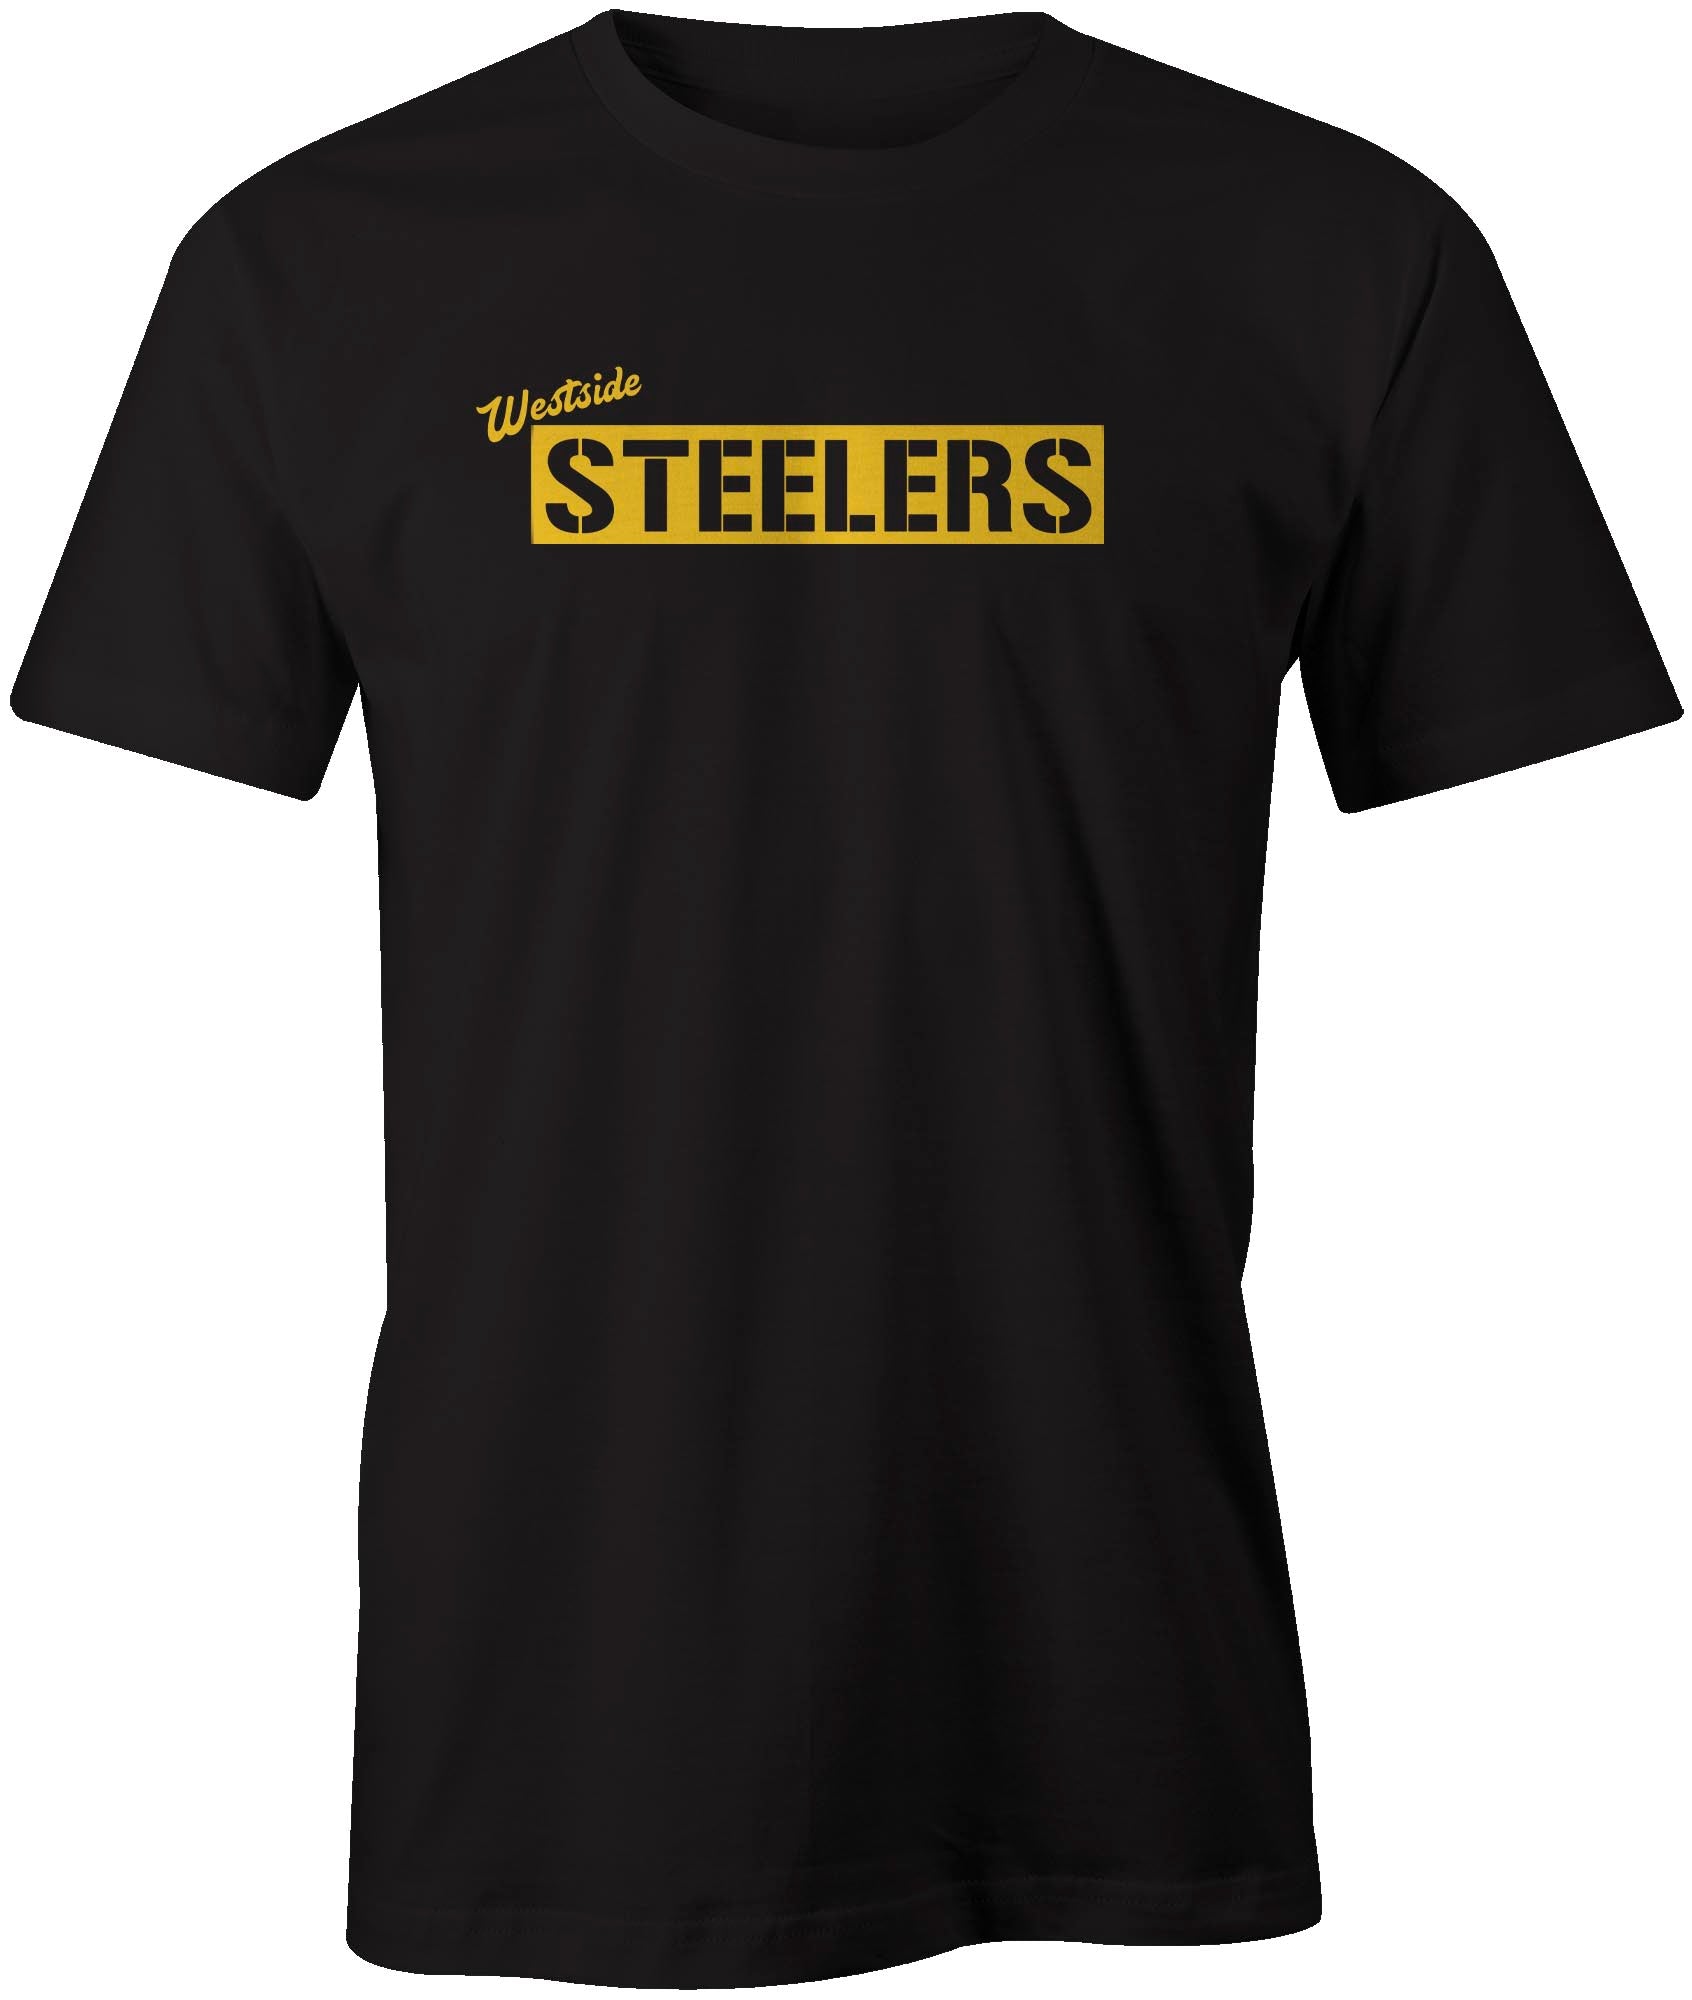 Westside Steelers Reverse Box Style T-Shirt